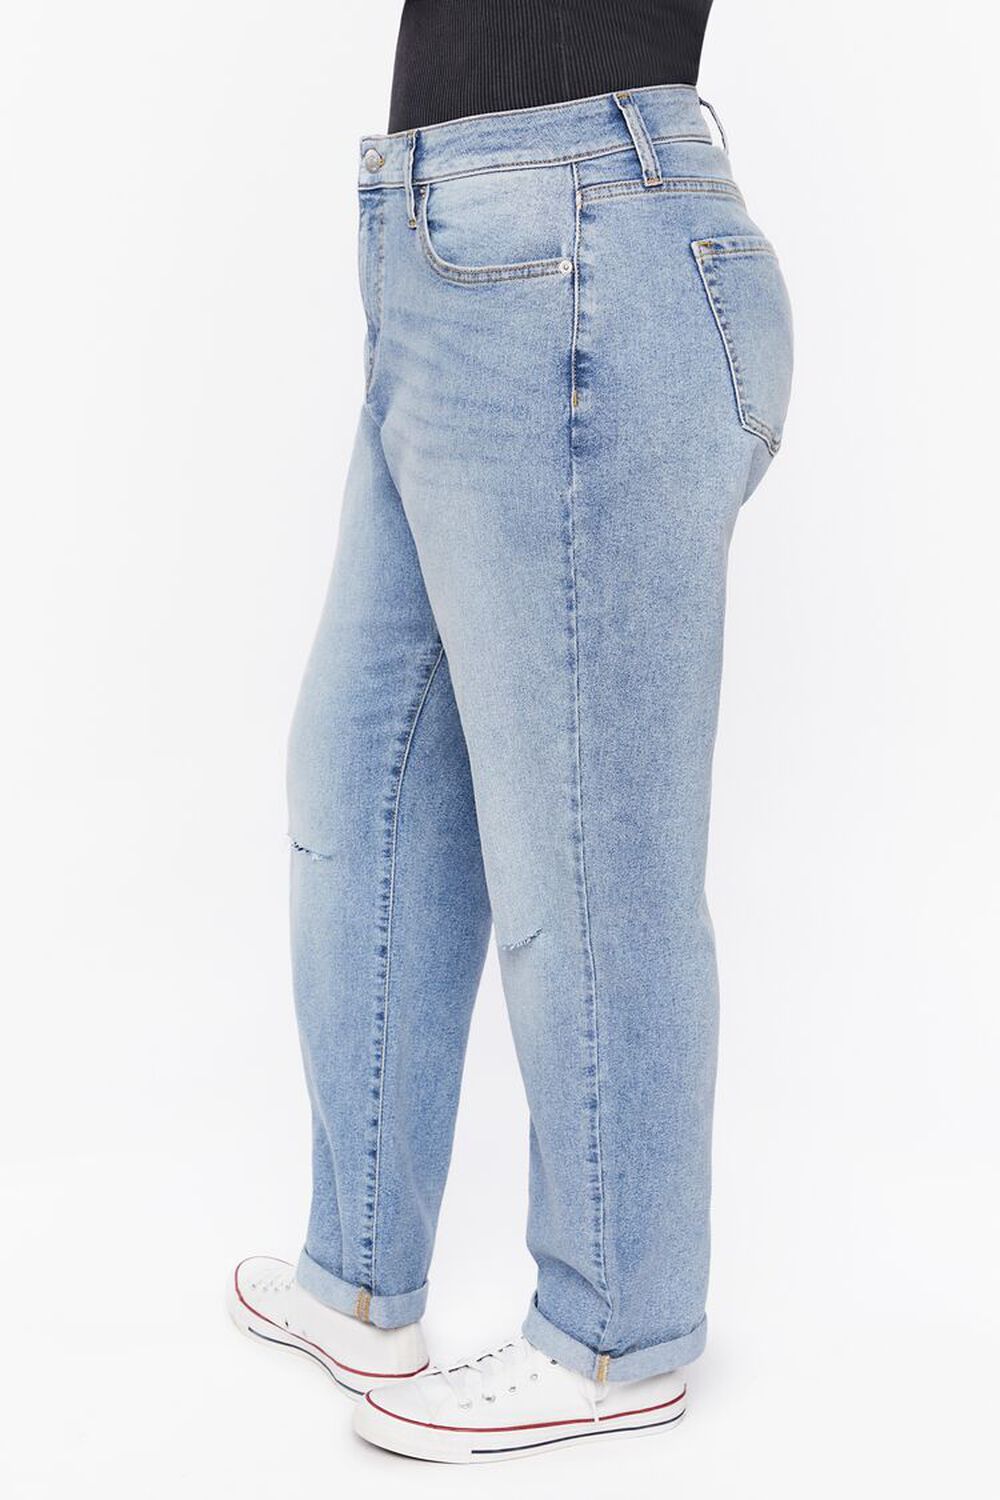 MEDIUM DENIM Plus Size Distressed Baggy Jeans, image 3